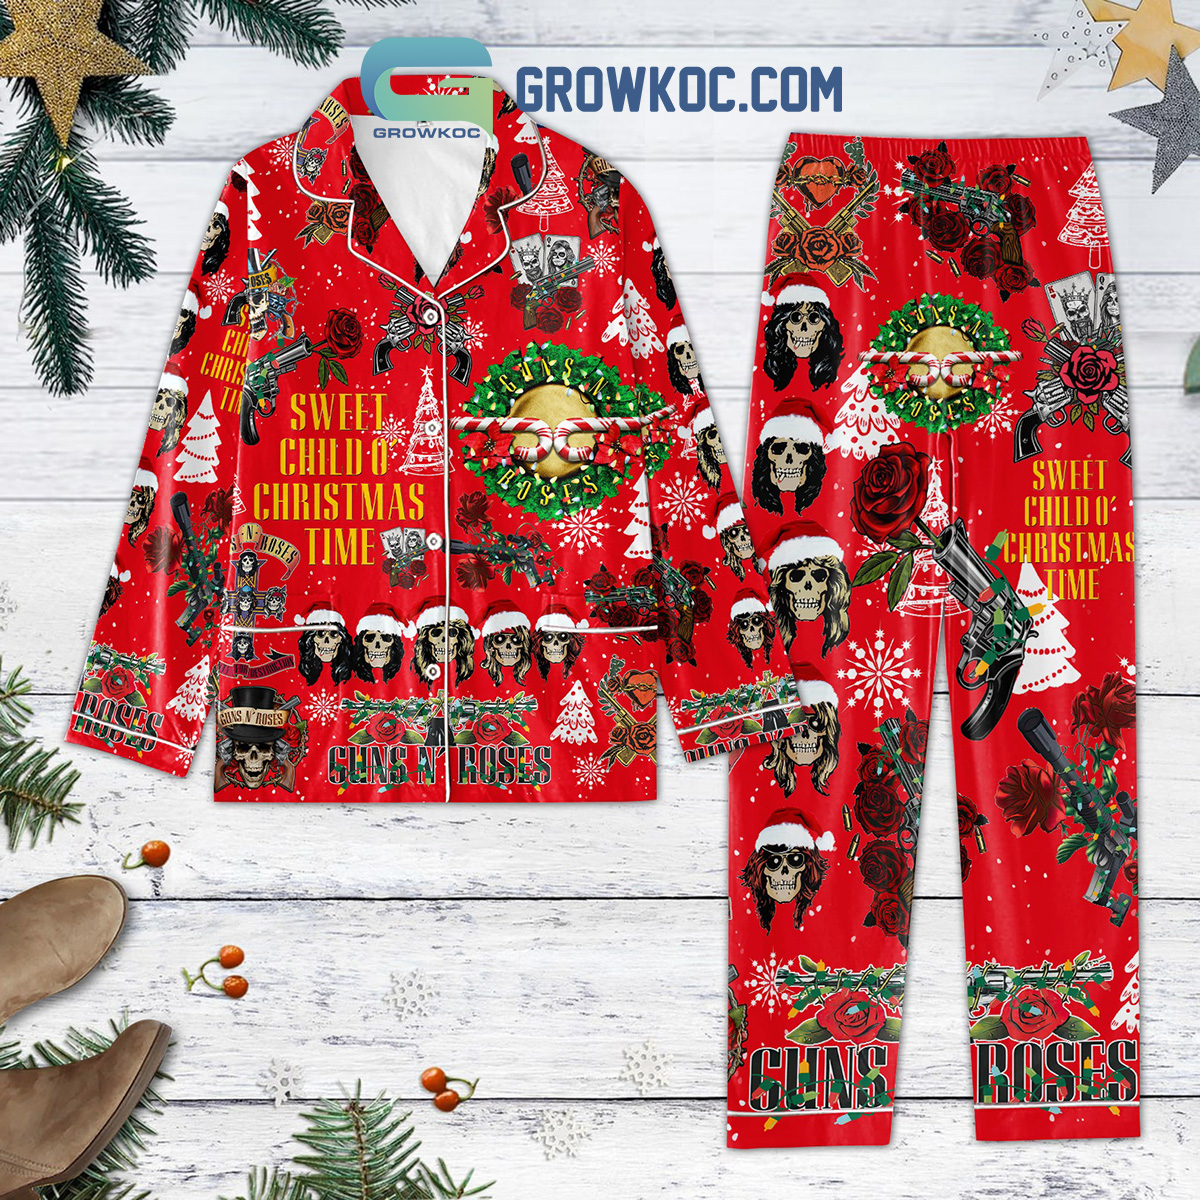 Guns N' Roses Sweet Child O' Christmas Time Pajamas Set